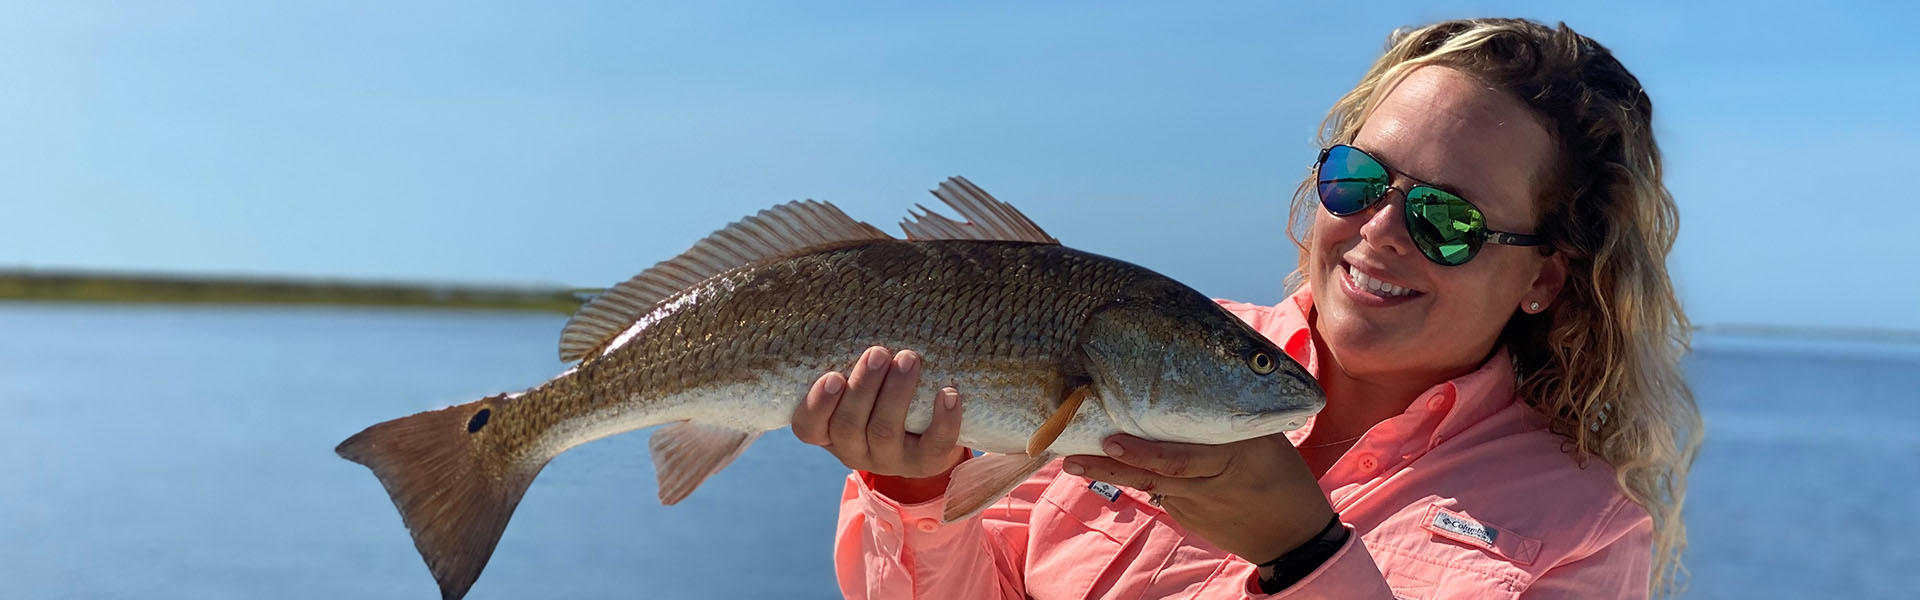 Fishing in Florida - Florida Smart